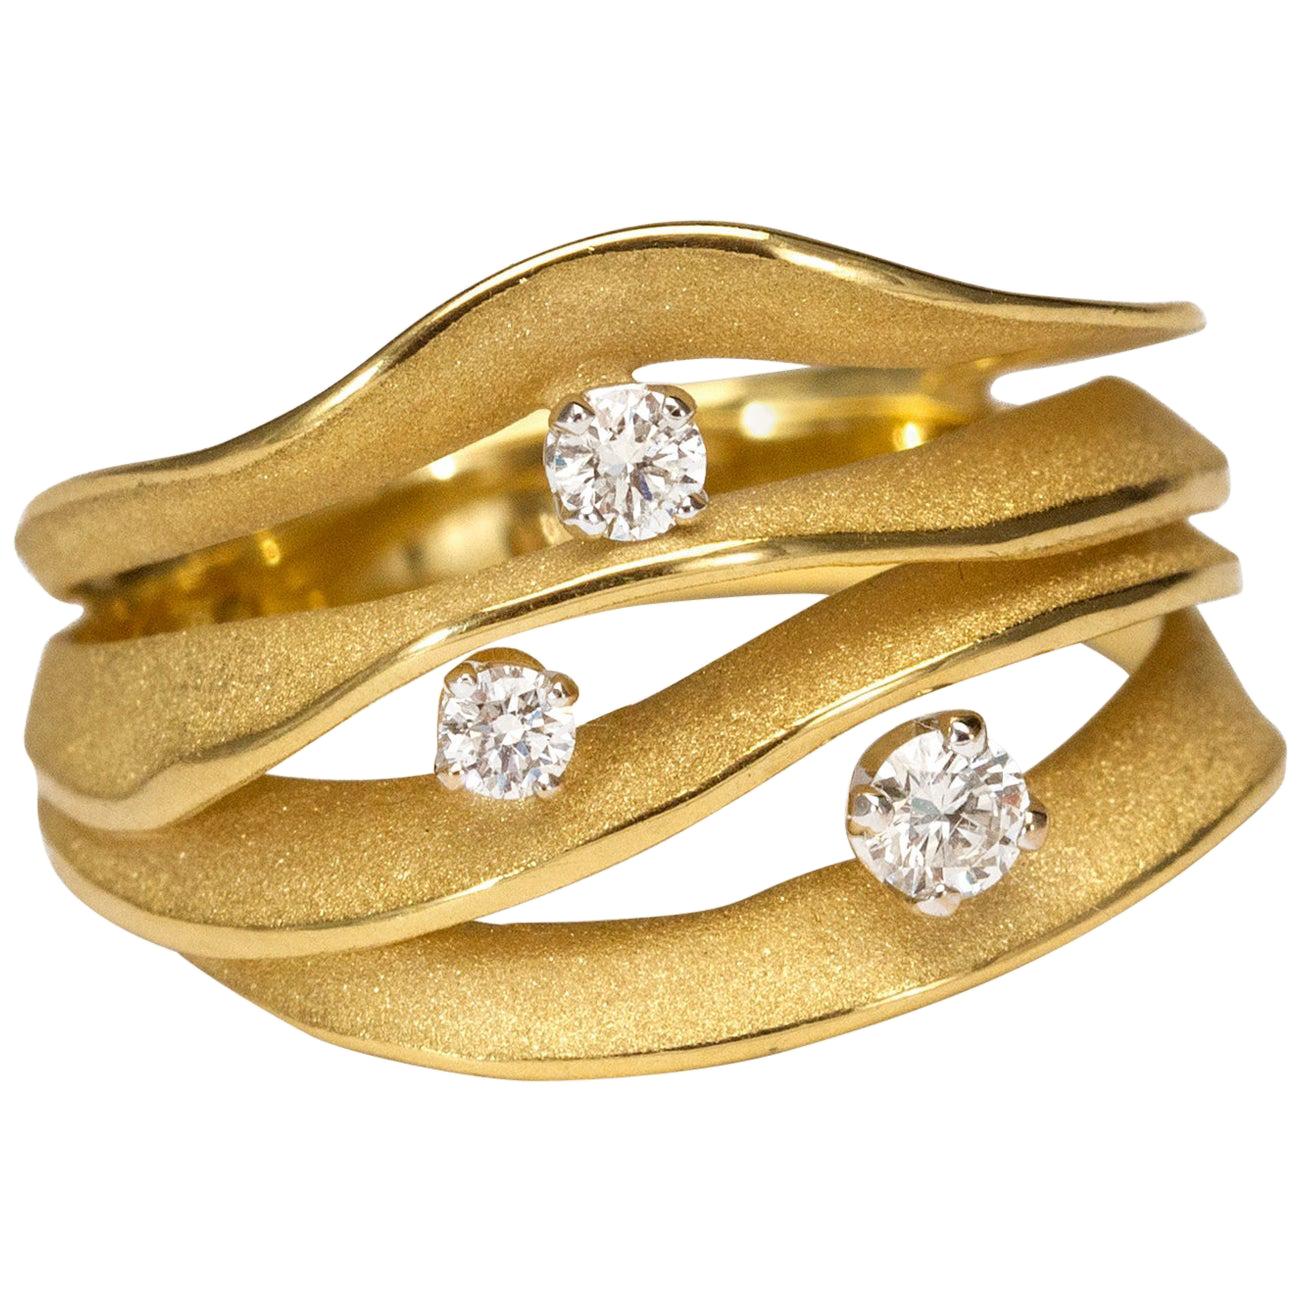 Annamaria Cammilli "Dune Royal" Ring with Diamonds in 18 Karat Lemon Bamboo